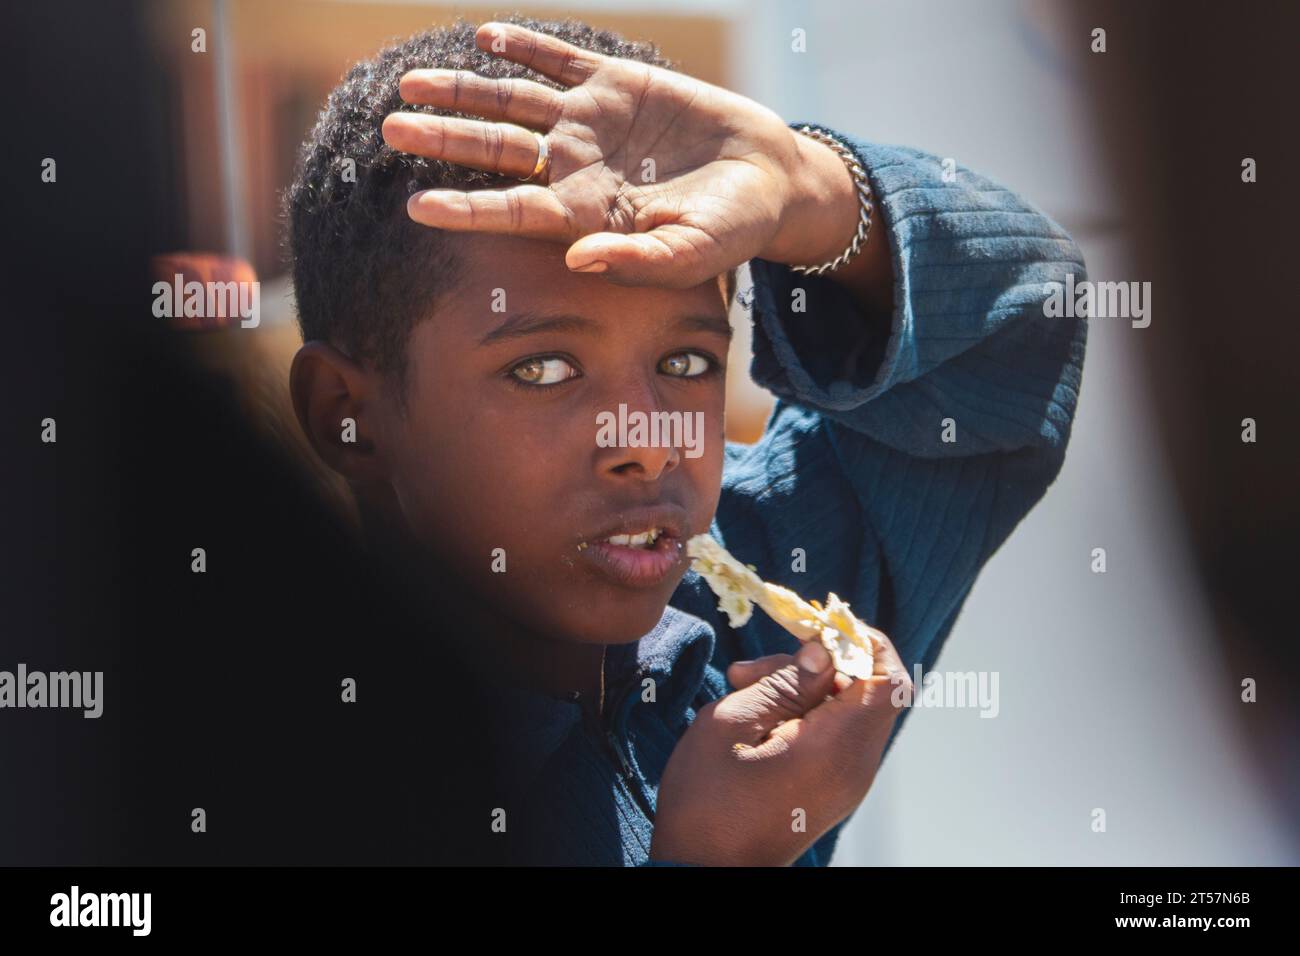 Arabian boy with beautiful eyes eats bread,20.04.2012 Qesm Al Qoseir Stock Photo